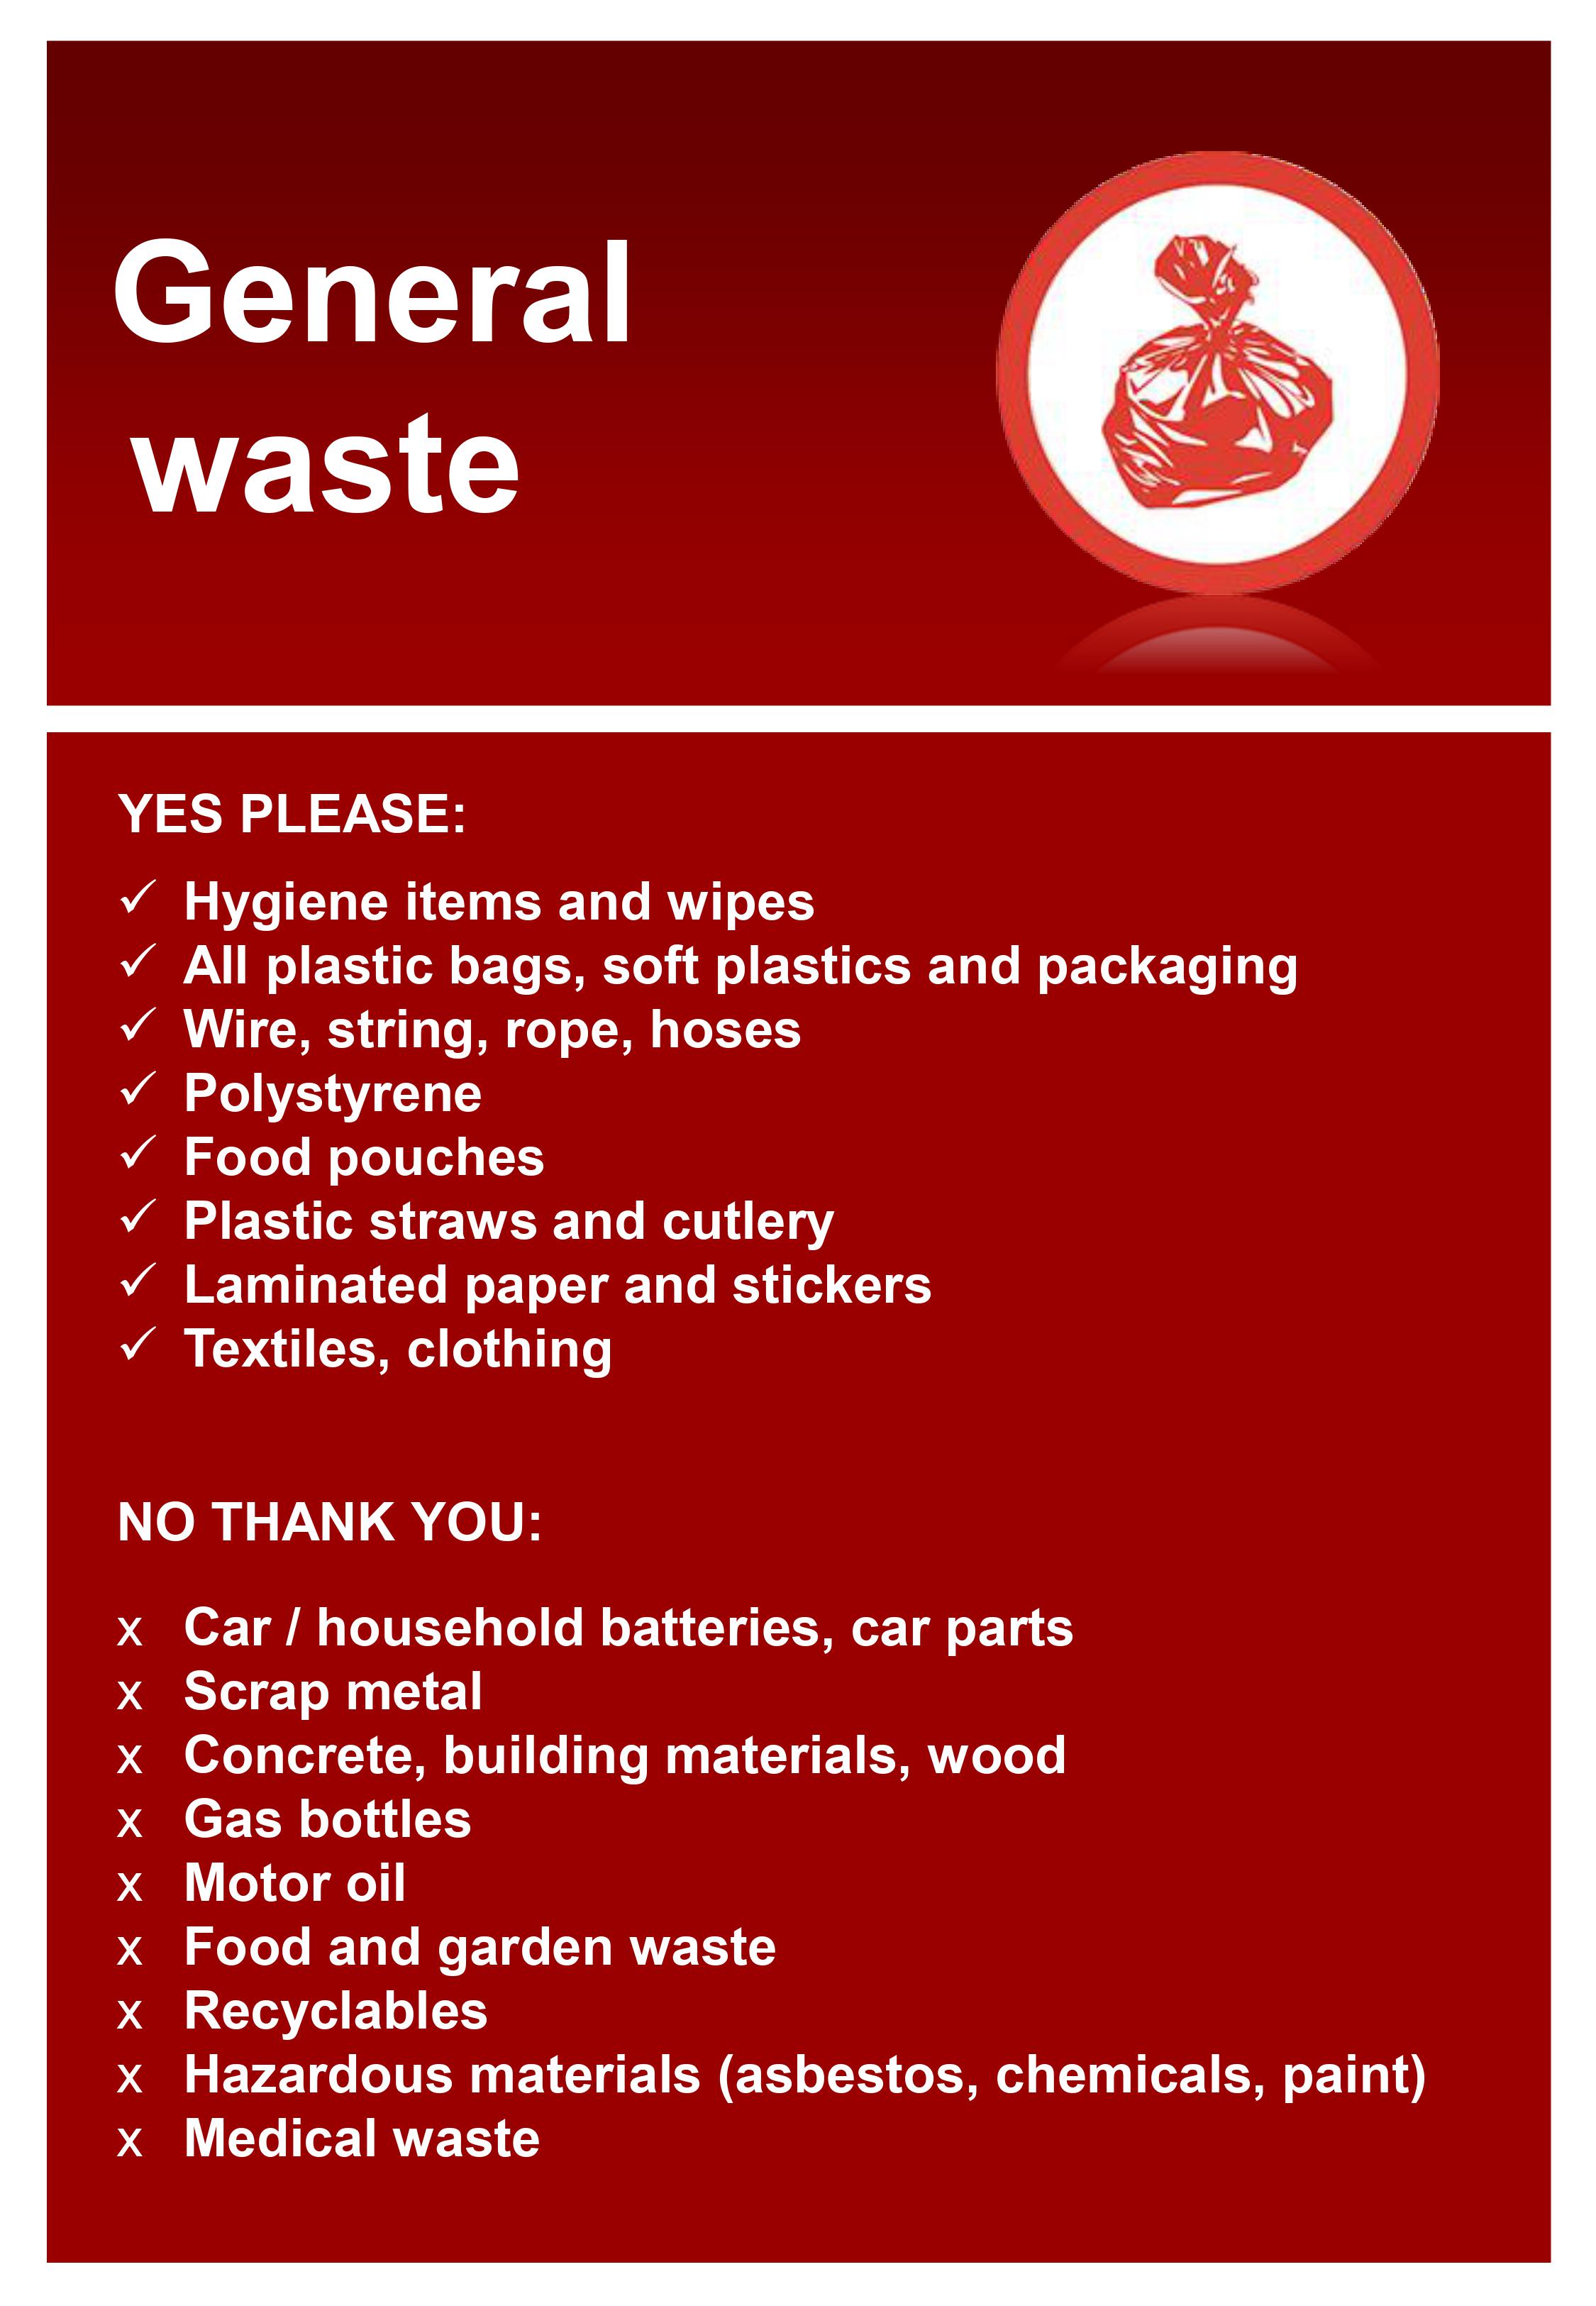 general waste information poster